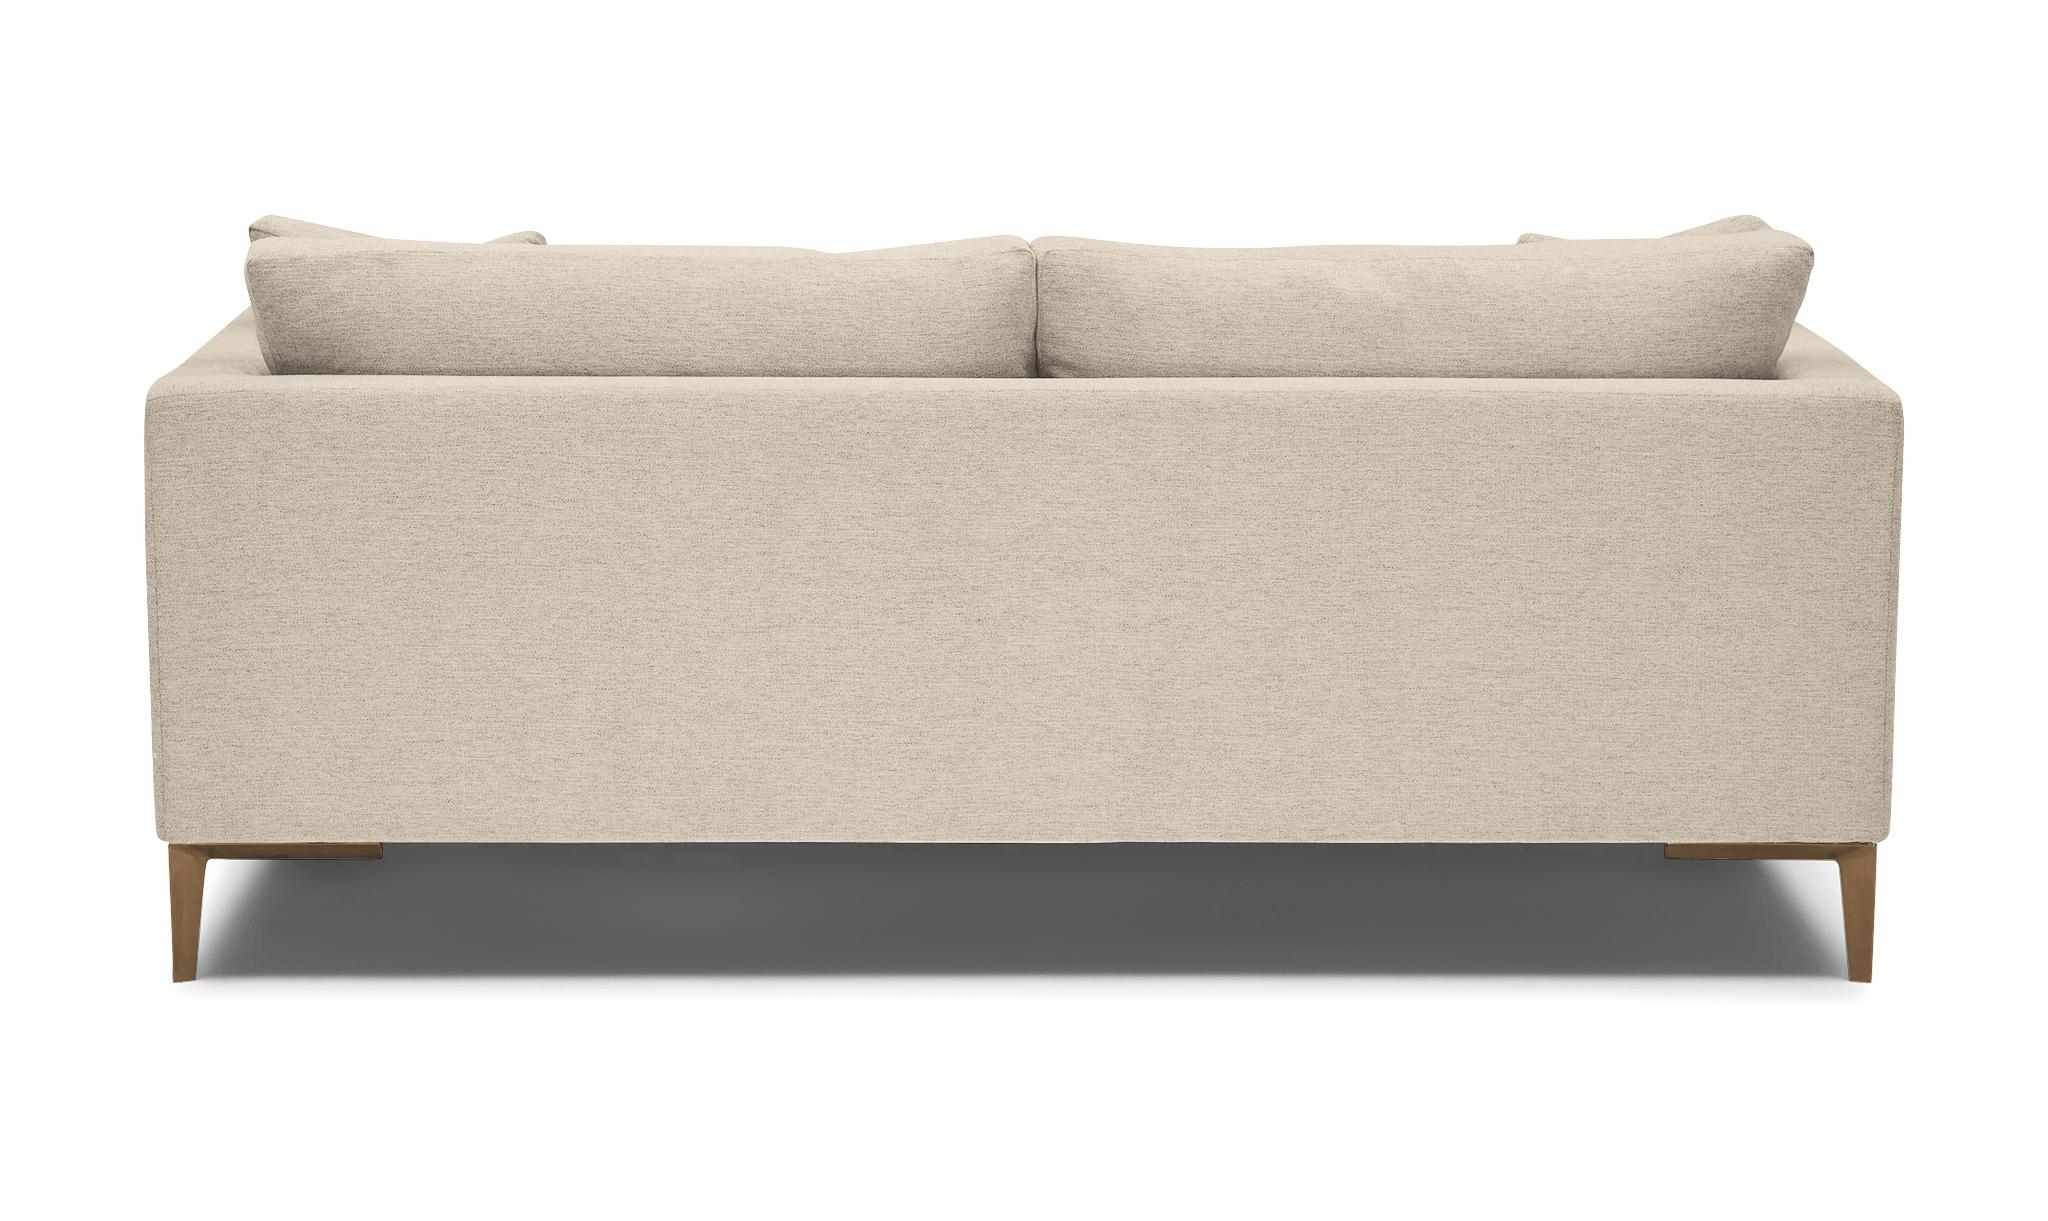 Beige/White Ainsley Mid Century Modern Sofa - Cody Sandstone - Image 4